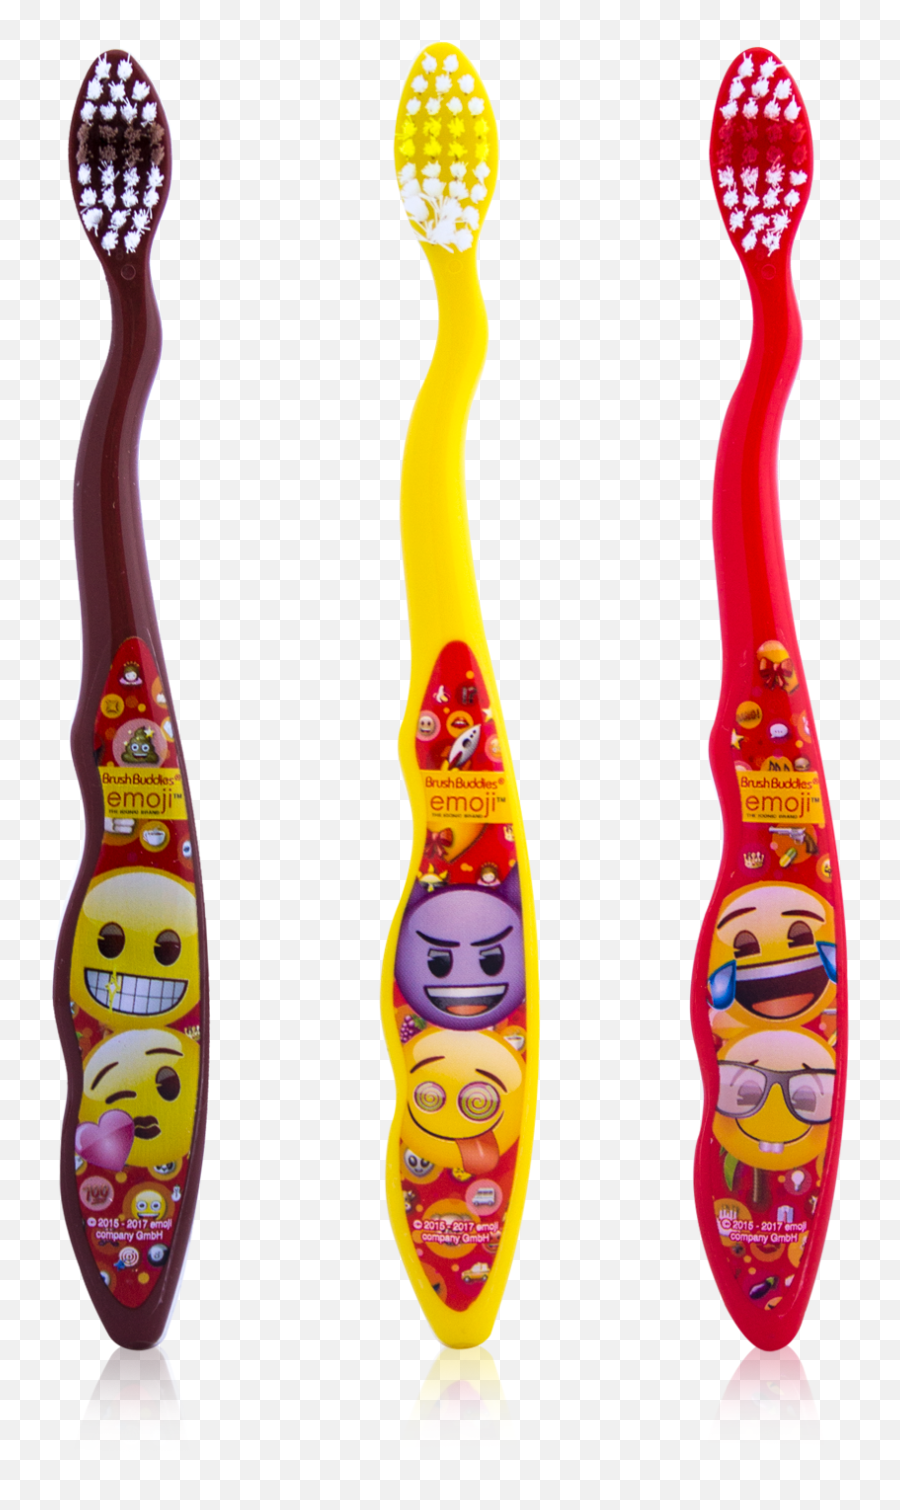 Emoji Toothbrush 3 Pack U2013 Brush Buddies - Toothbrush,The Tank You Emoji